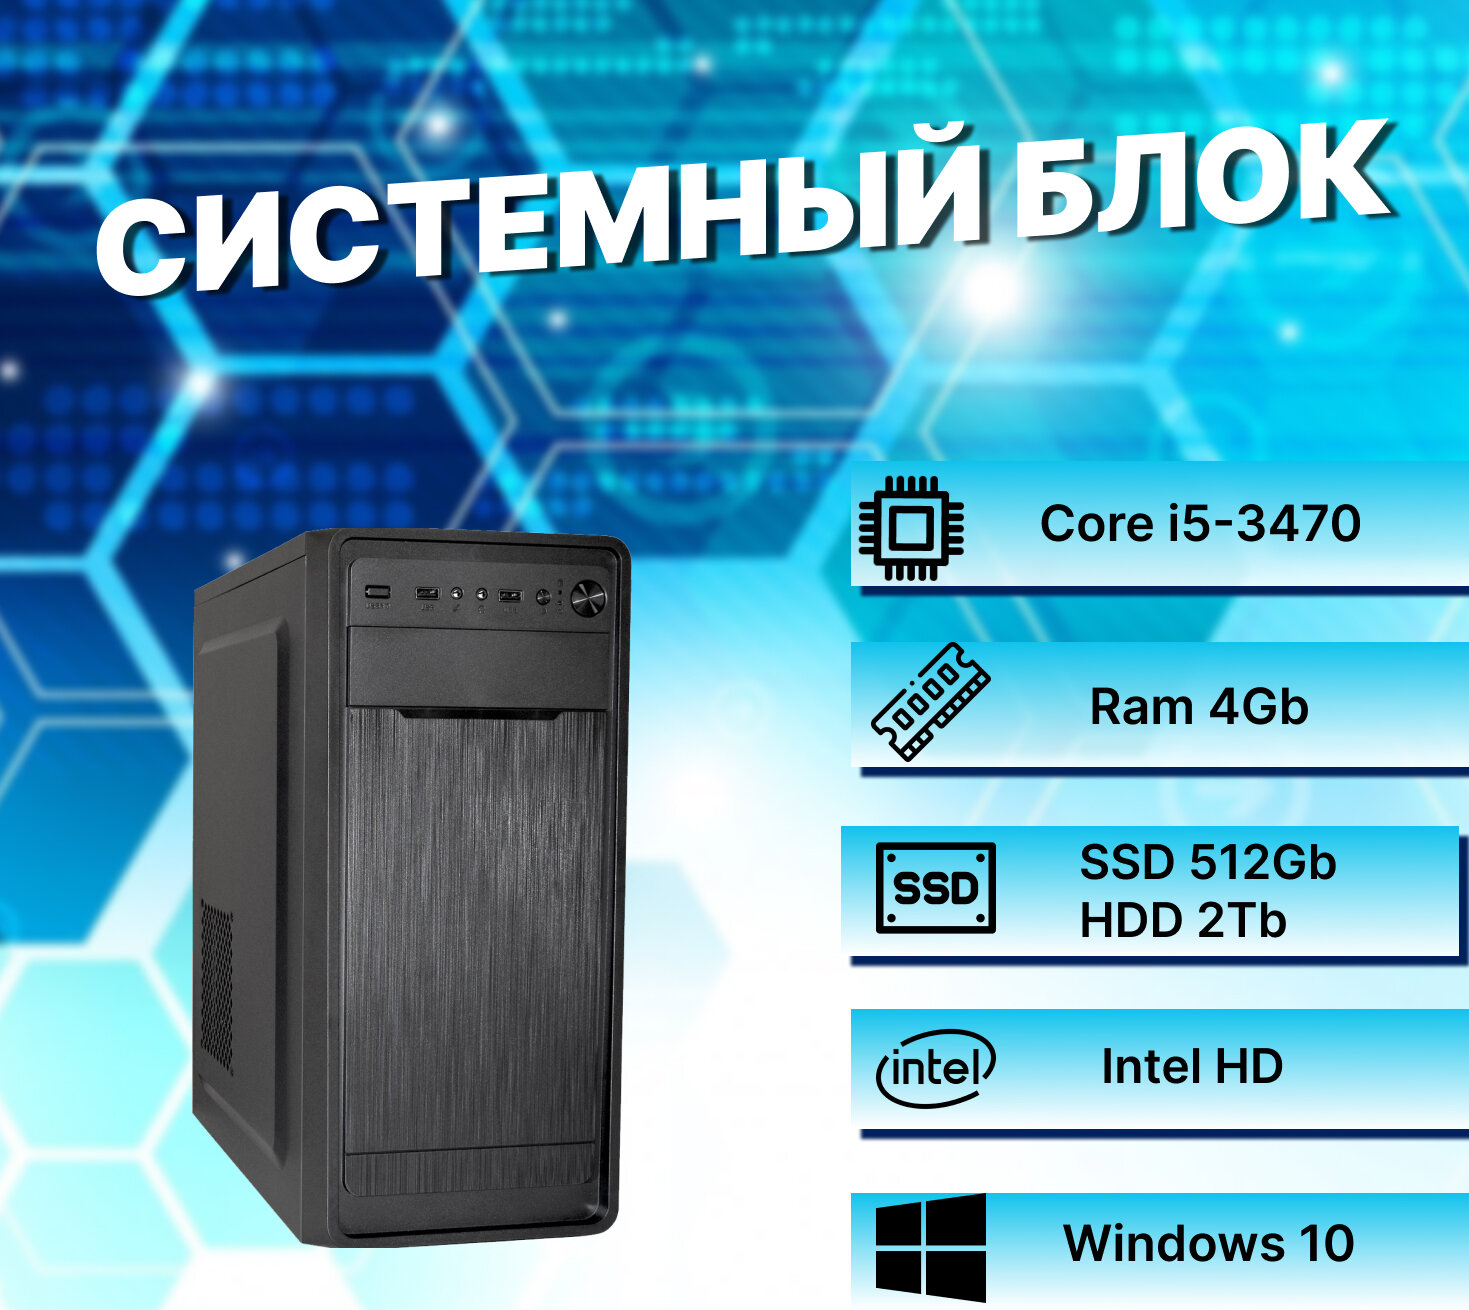 Системный блок Intel Core I5-3470 (3.2ГГц)/ RAM 4Gb/ SSD 512Gb/ HDD 2Tb/ Intel HD/ Windows 10 Pro